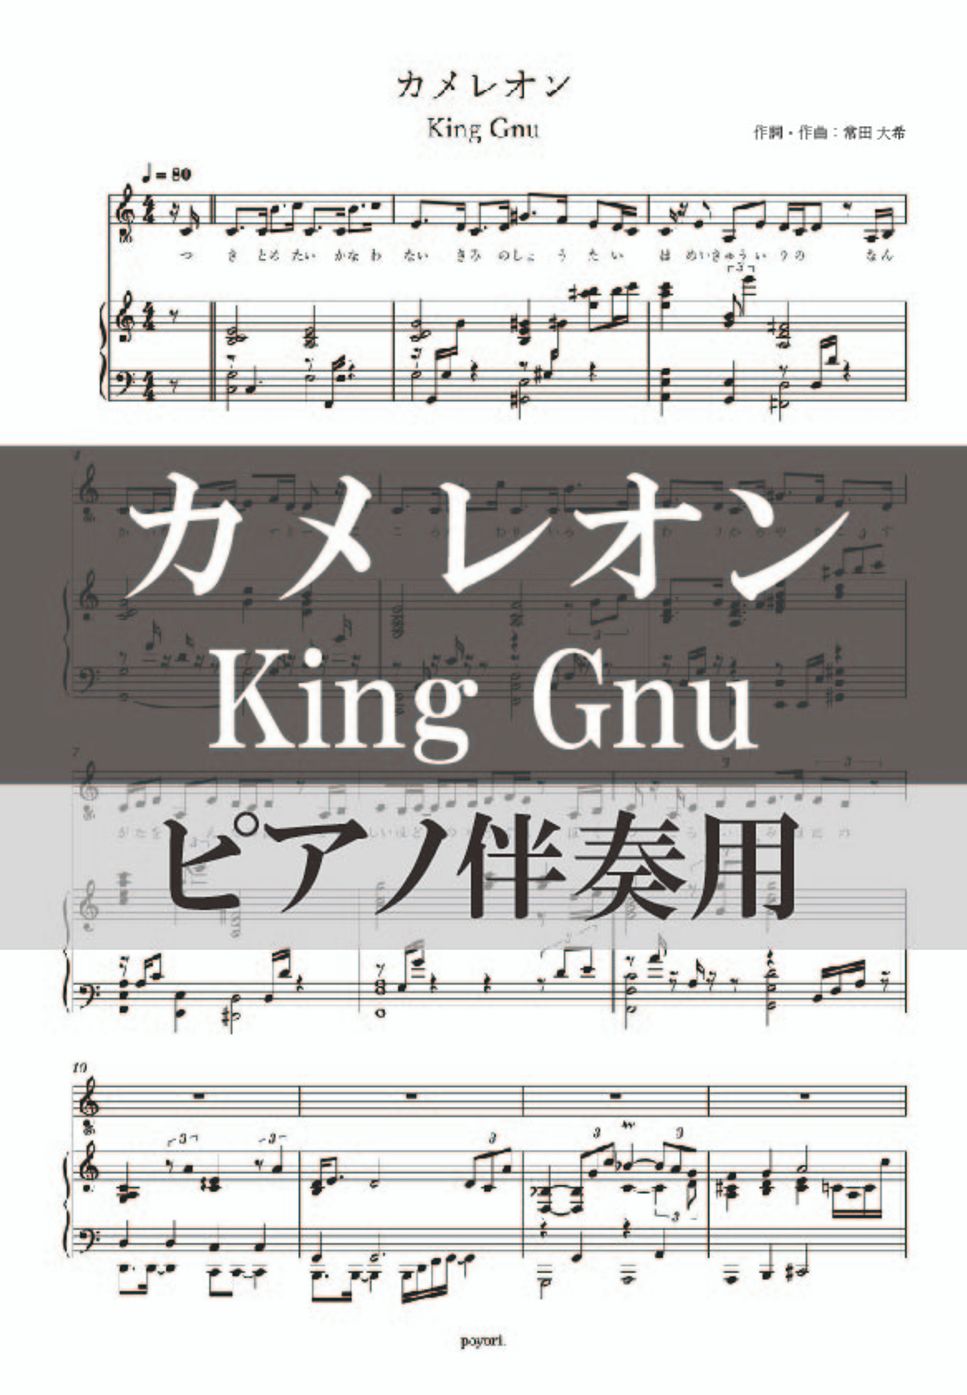 King Gnu - カメレオン (ピアノ伴奏/歌詞/コーラス) by poyori.